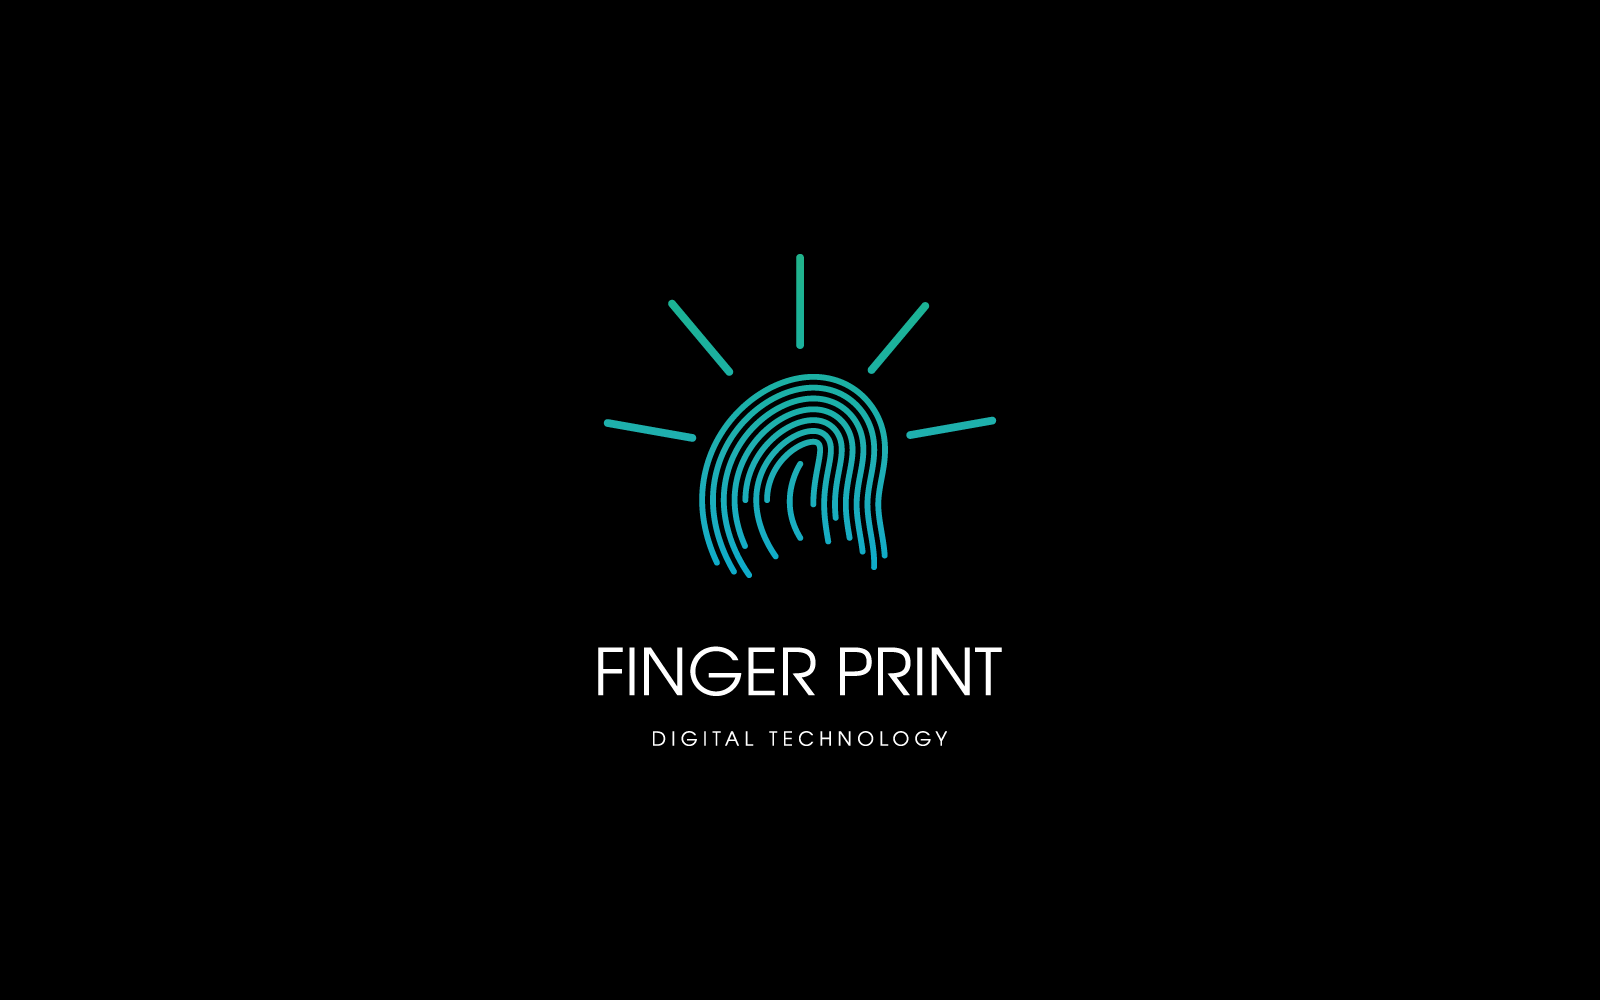 Fingerprint technology logo vector template